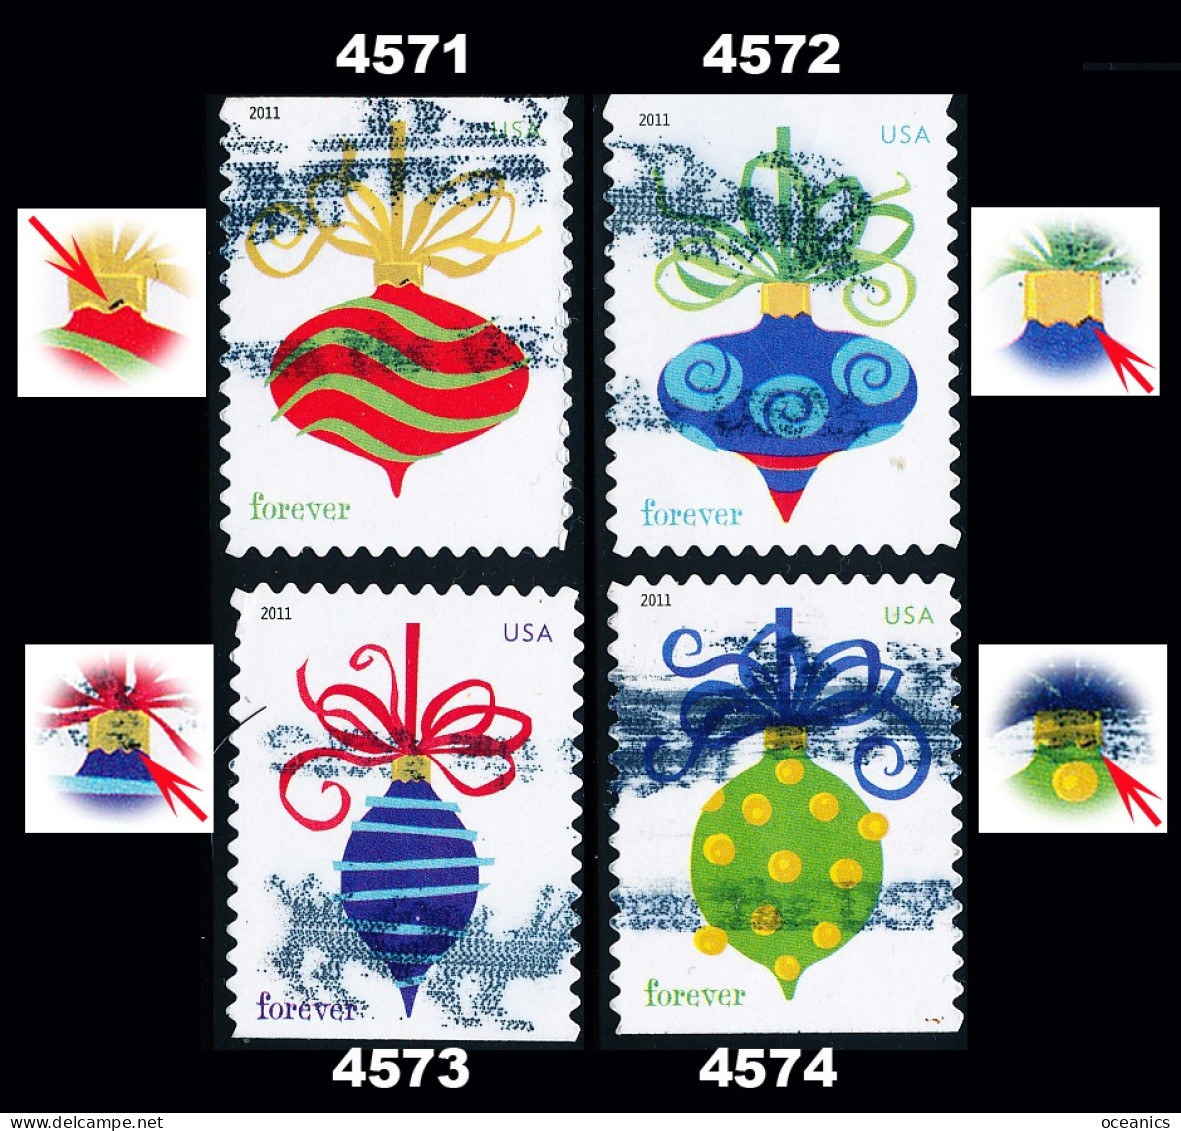 Etats-Unis / United States (Scott No.4571-74 - Ornements De Noël / Christmas Ornaments) (o) P3 - Used Stamps